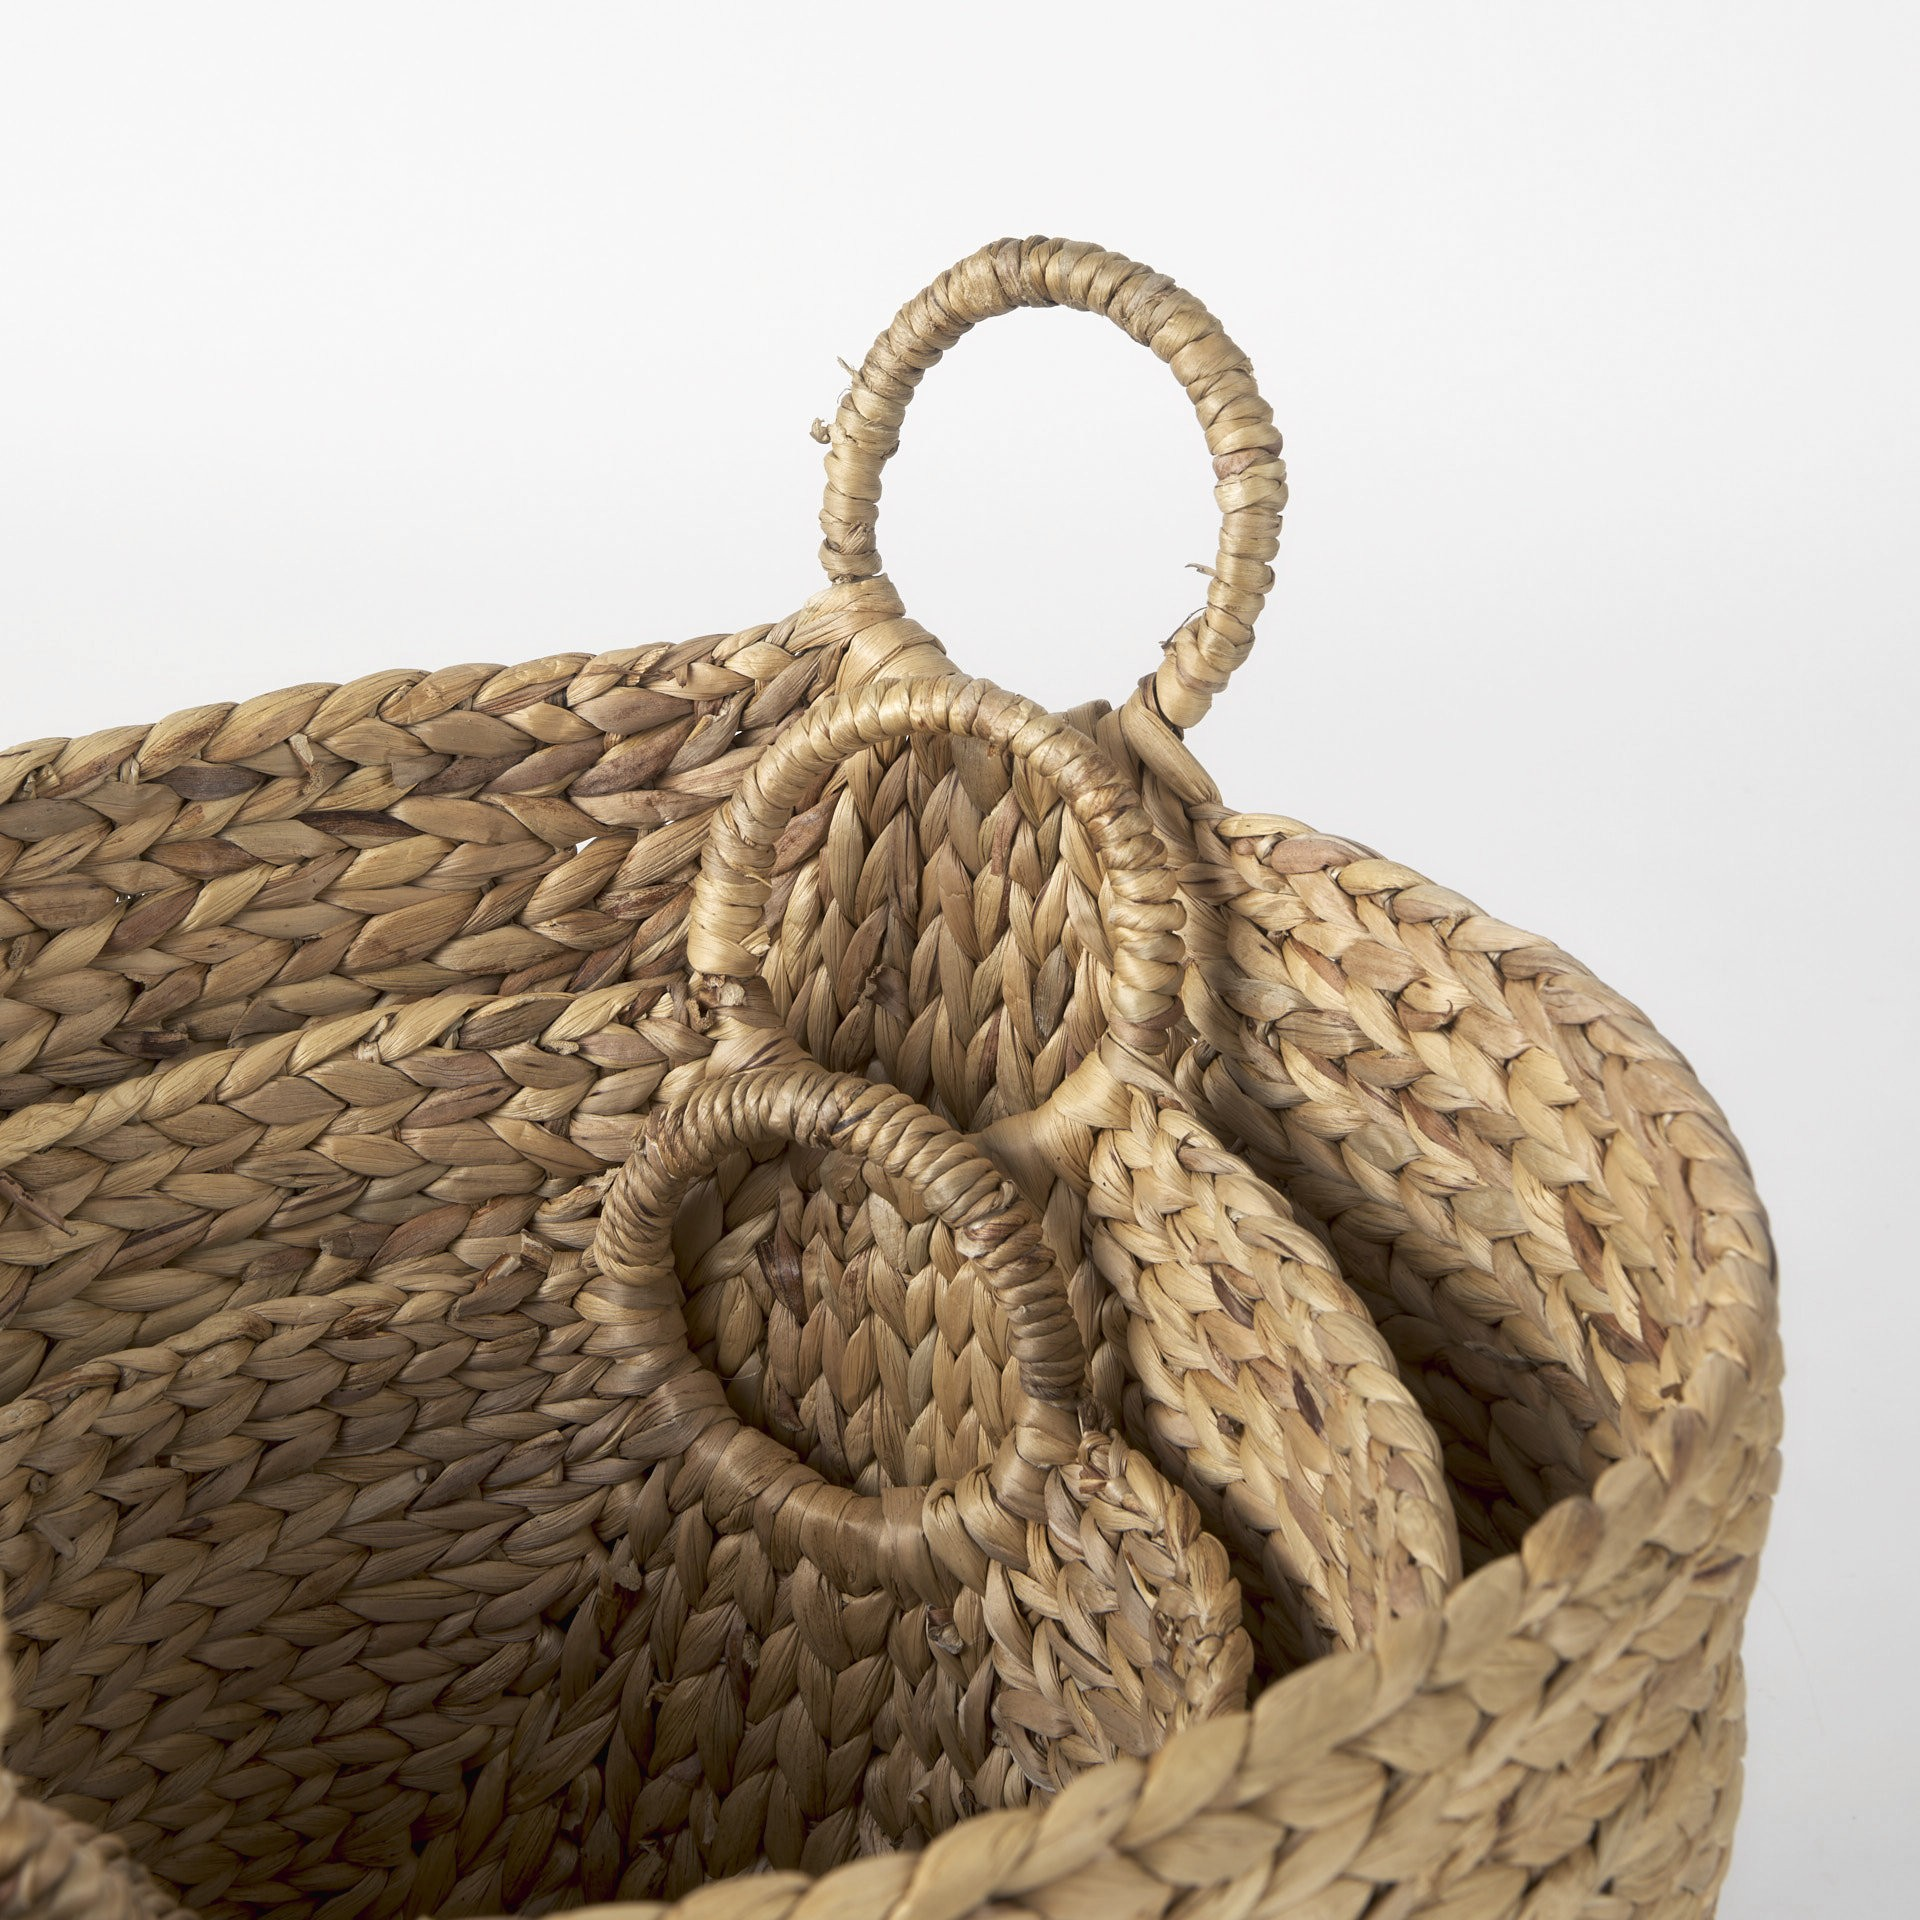 Braided Wicker Storage Basket Set